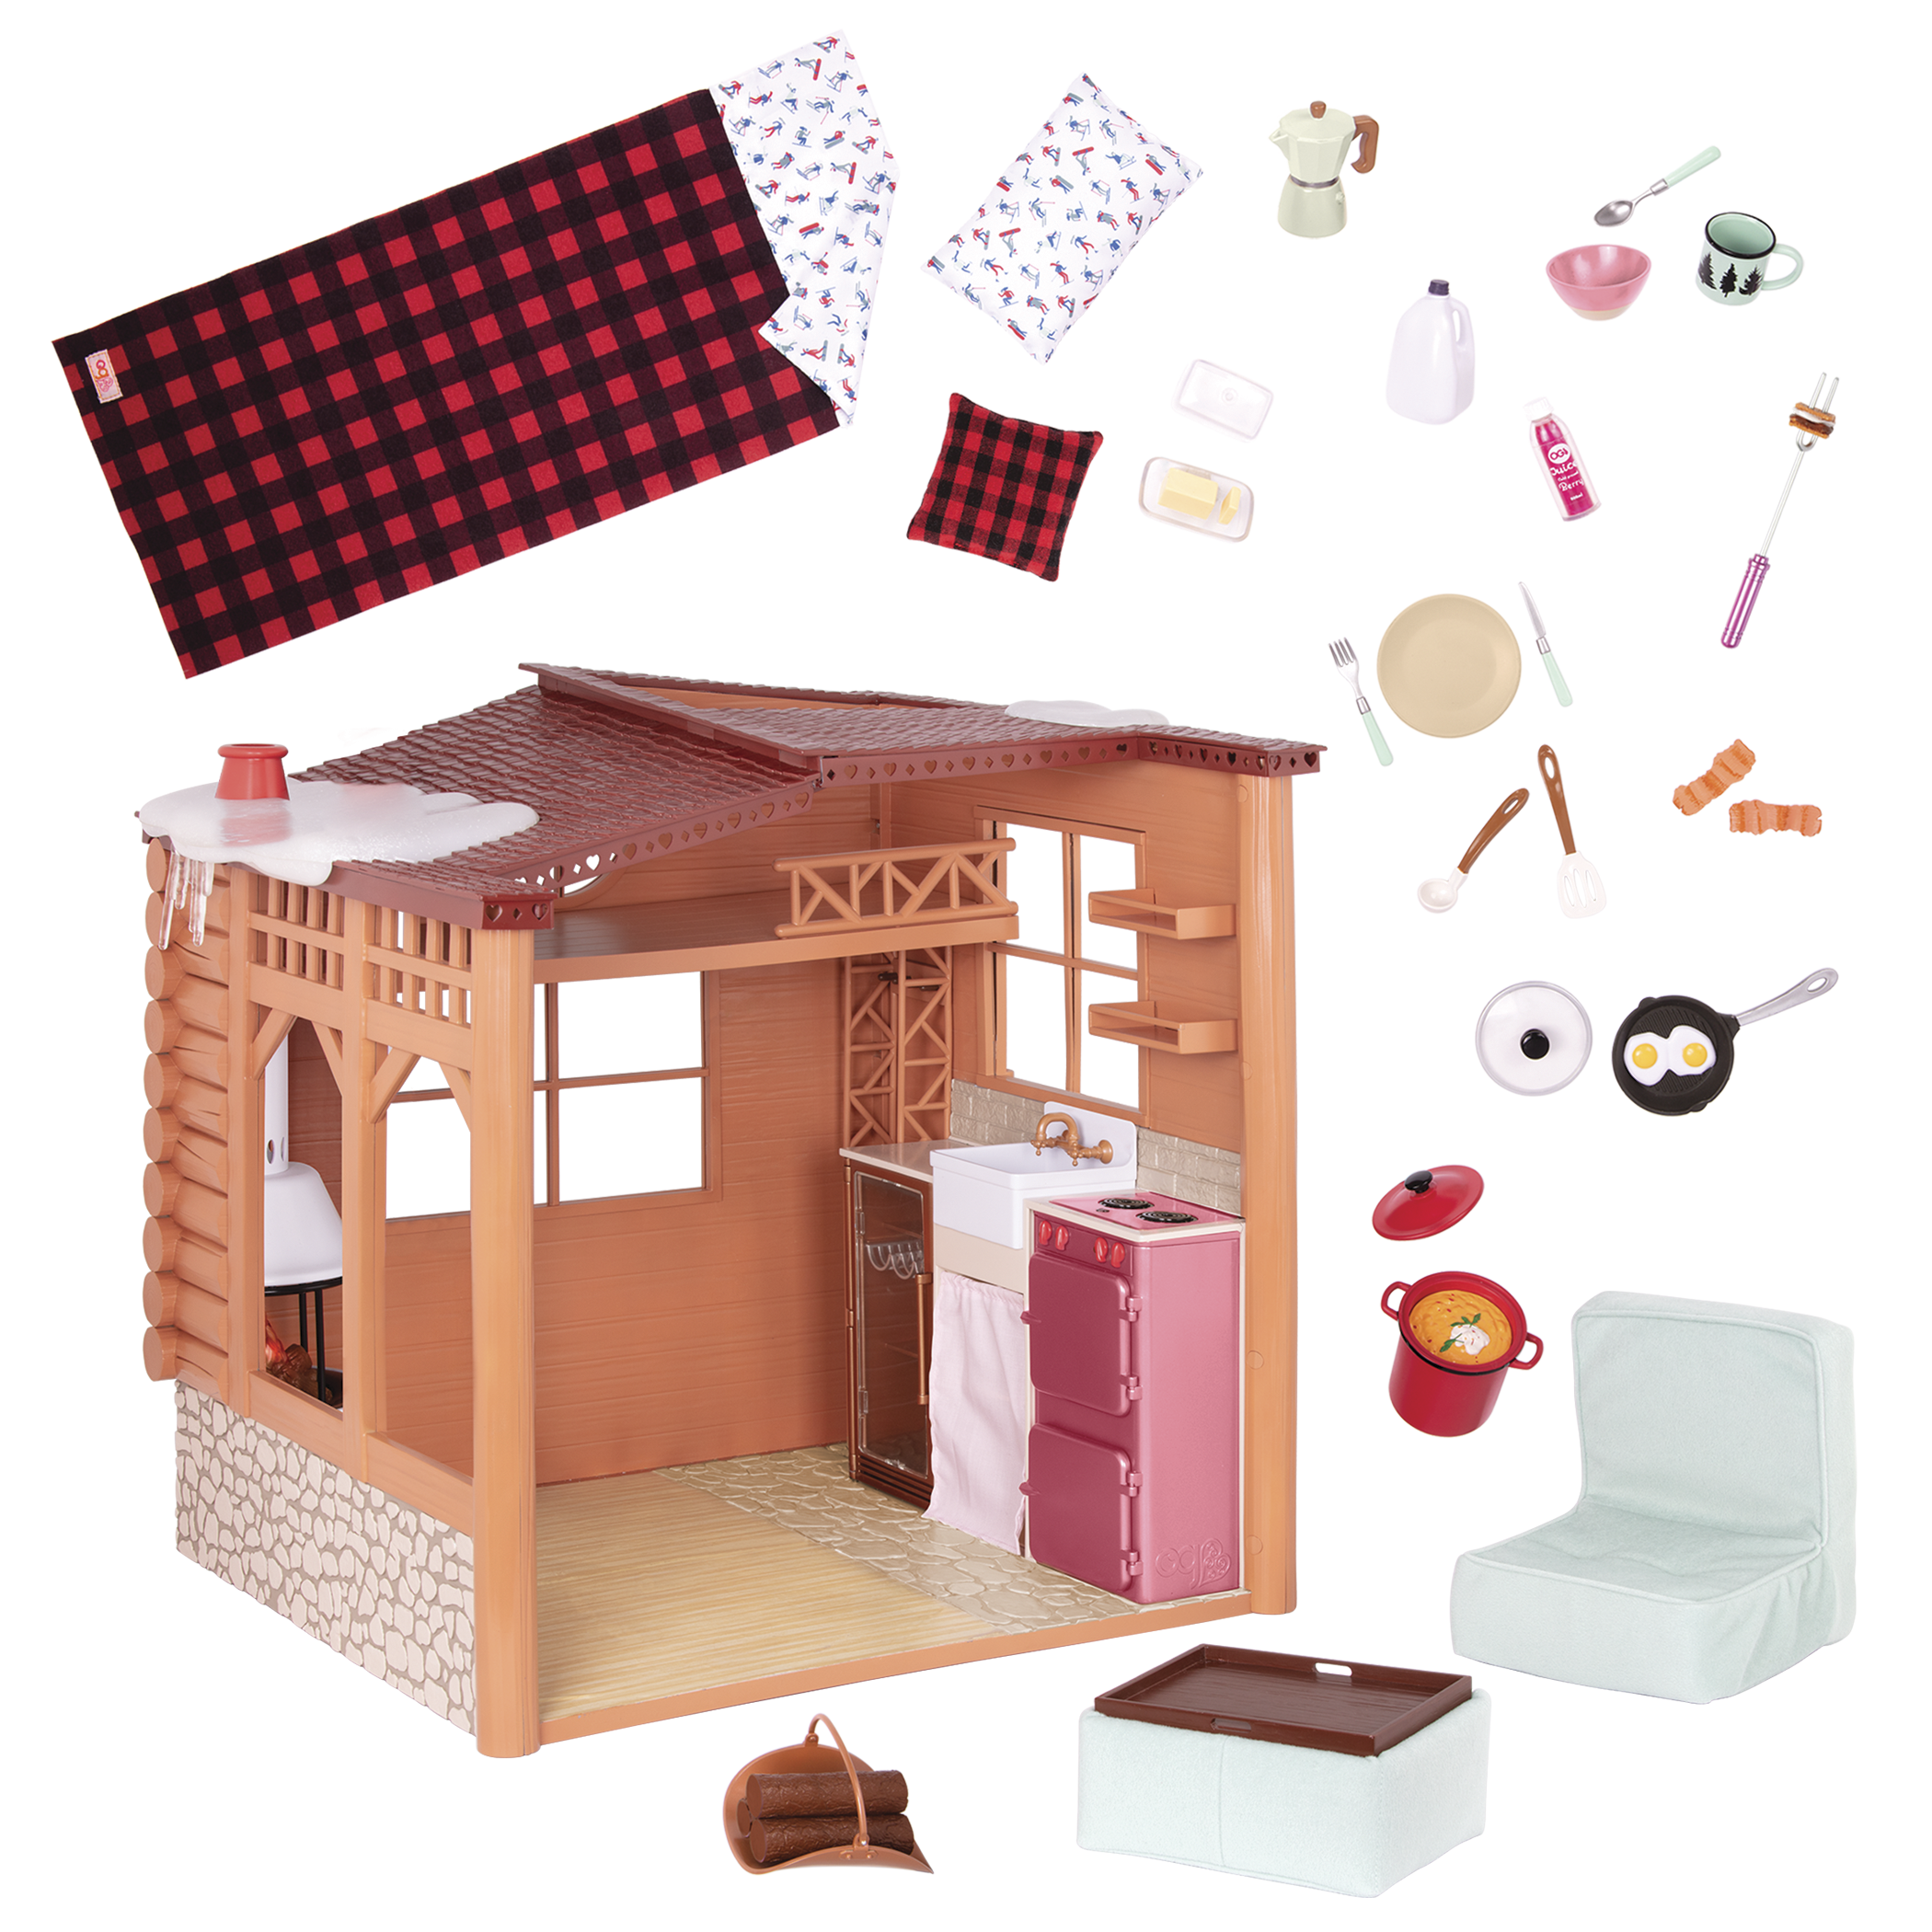 Cozy Cabin Dollhouse Playset for 18-inch Dolls 